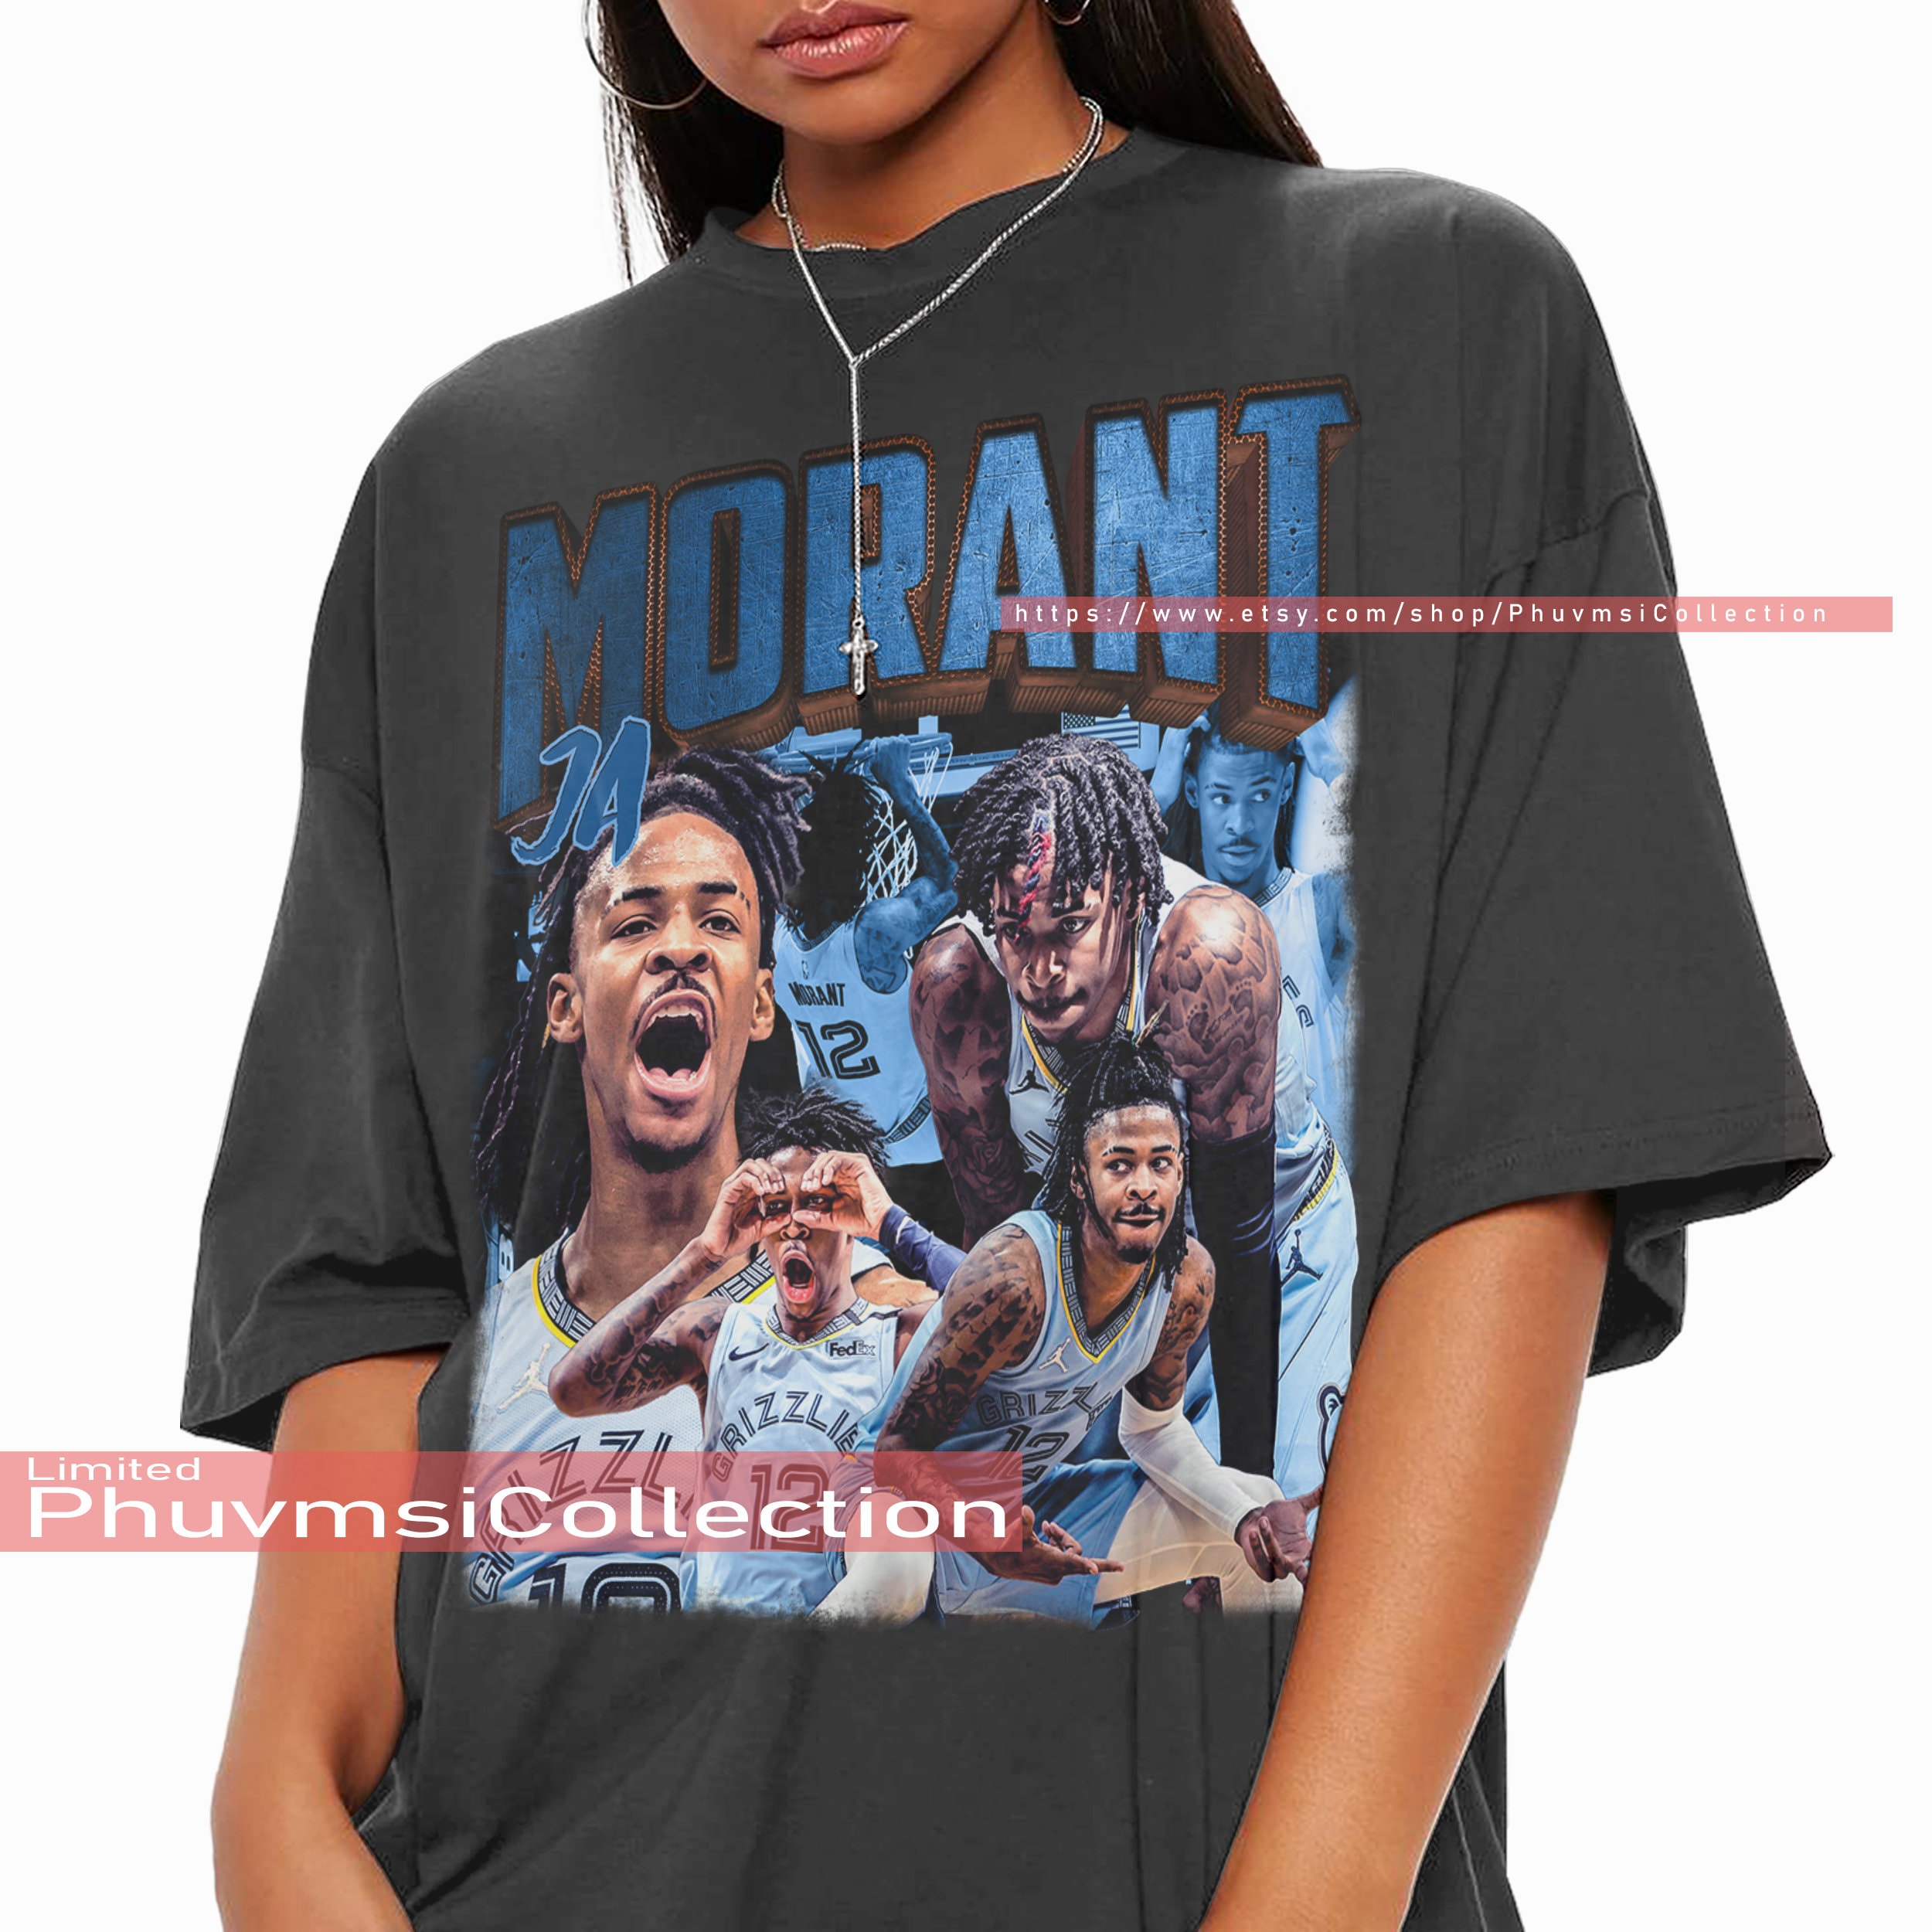 Ja Morant Shirt Merchandise Professional Basketball Player Vintage Bootleg  Vertical jump Basketball Tshirt 90s Unisex Sweatshirt SSK15